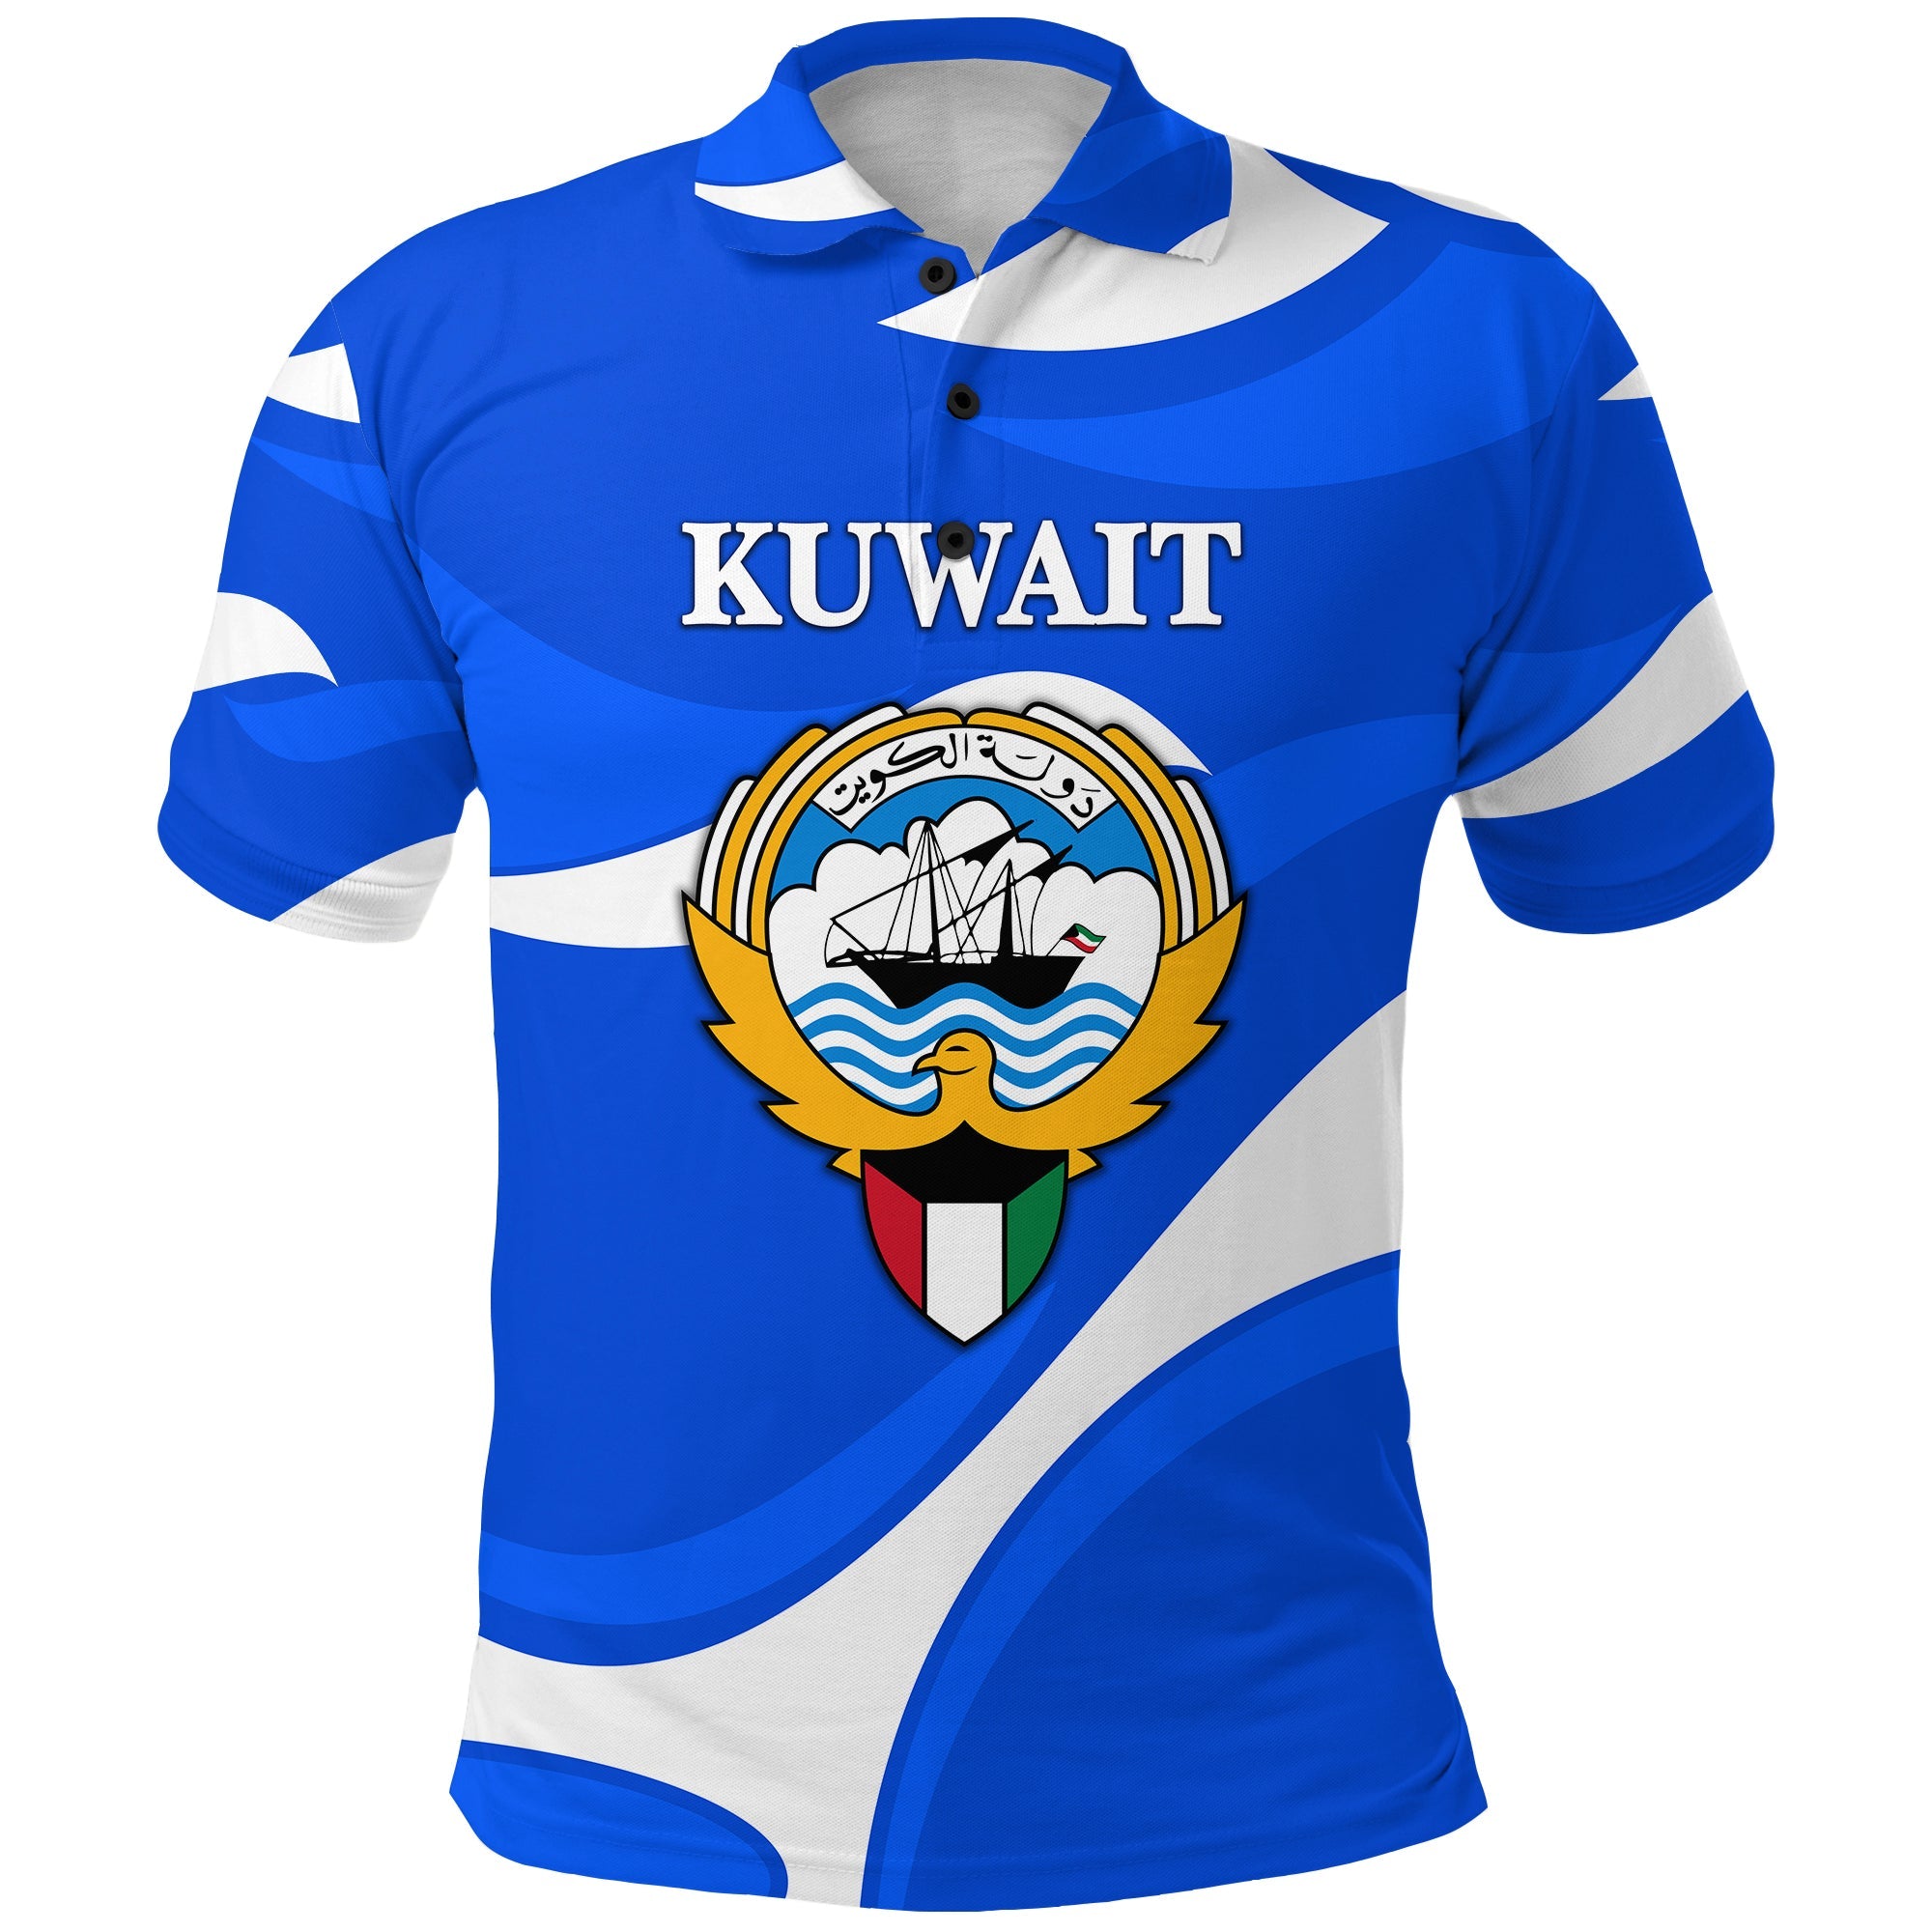 kuwait-polo-shirt-sporty-style-blue